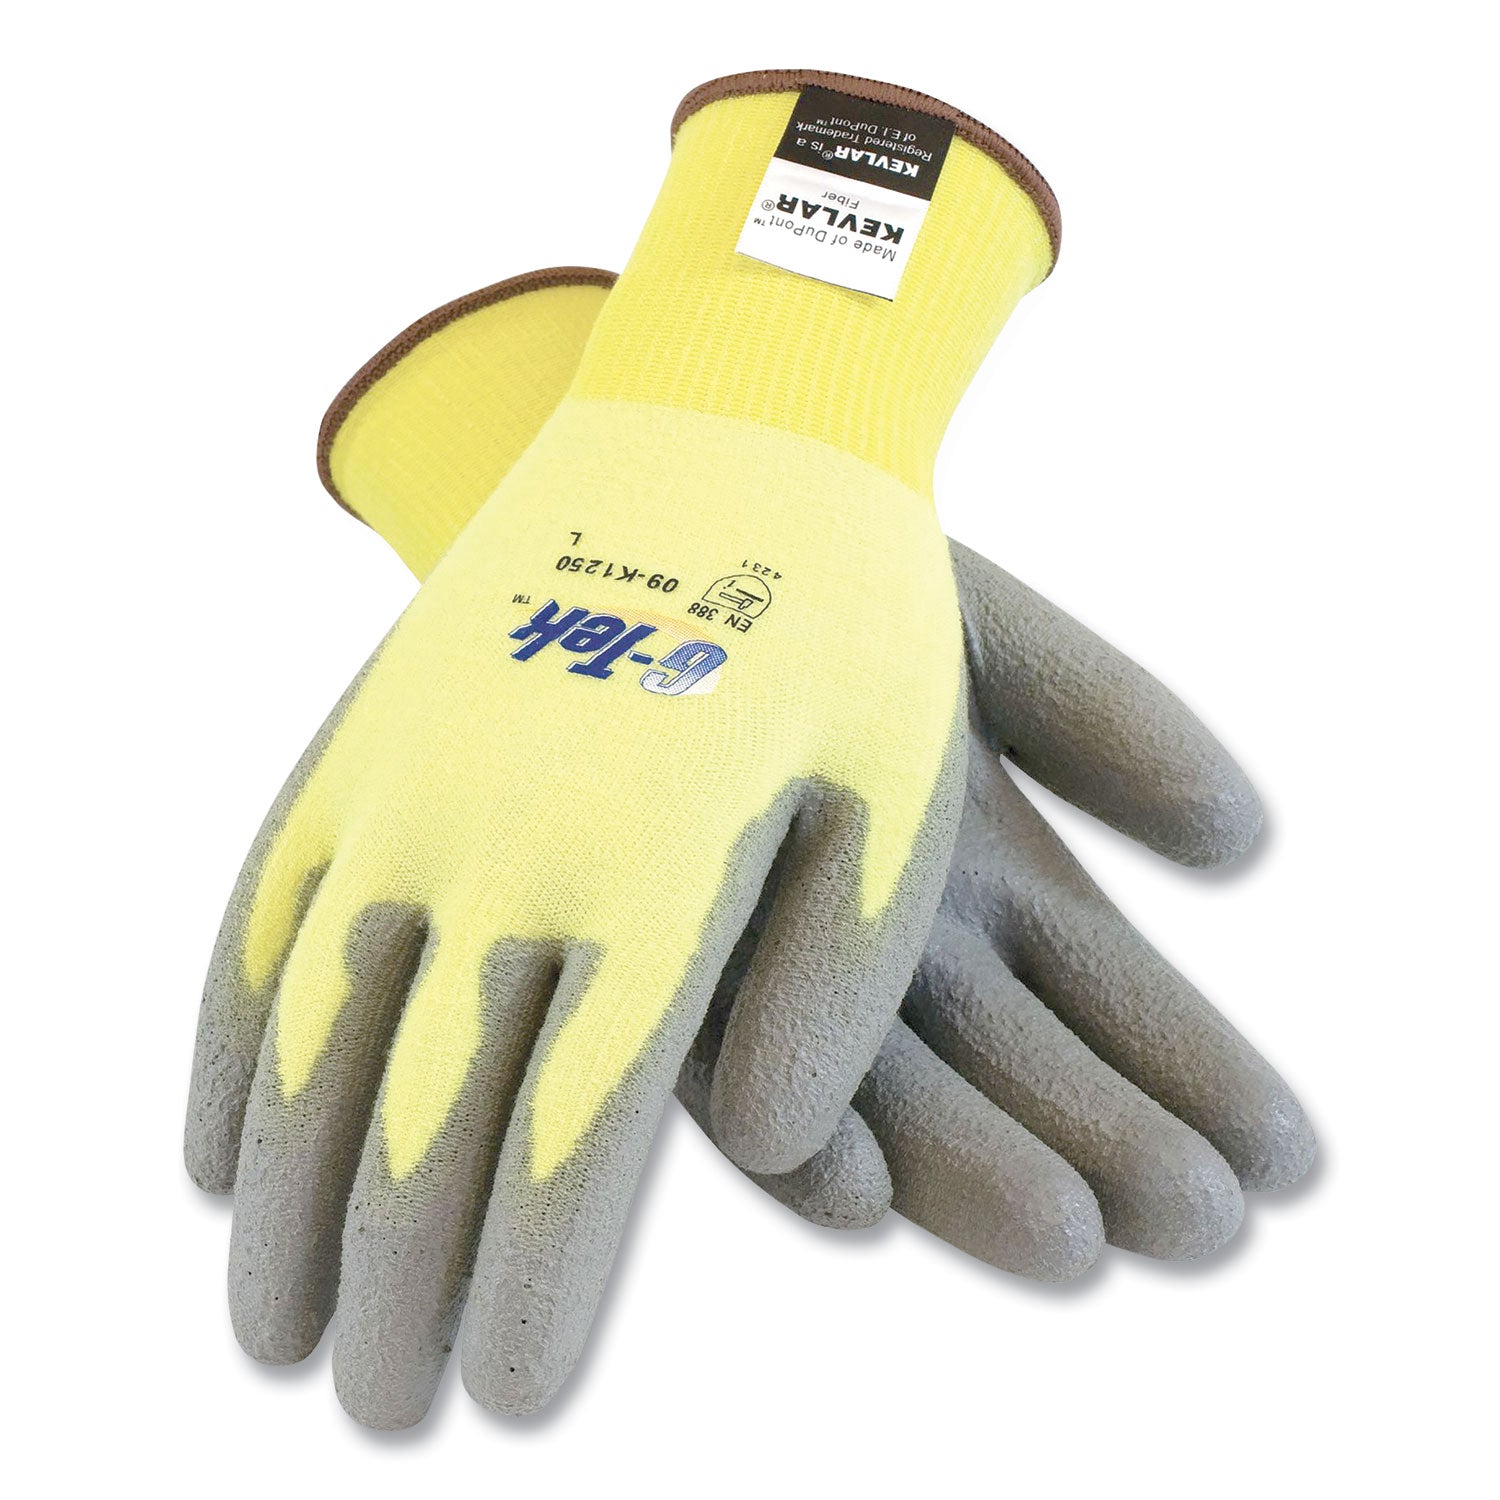 g-tek-kev-cut-resistant-seamless-knit-gloves-x-large-size-10-yellow-gray-12-pairs_pid09k1250xl - 1